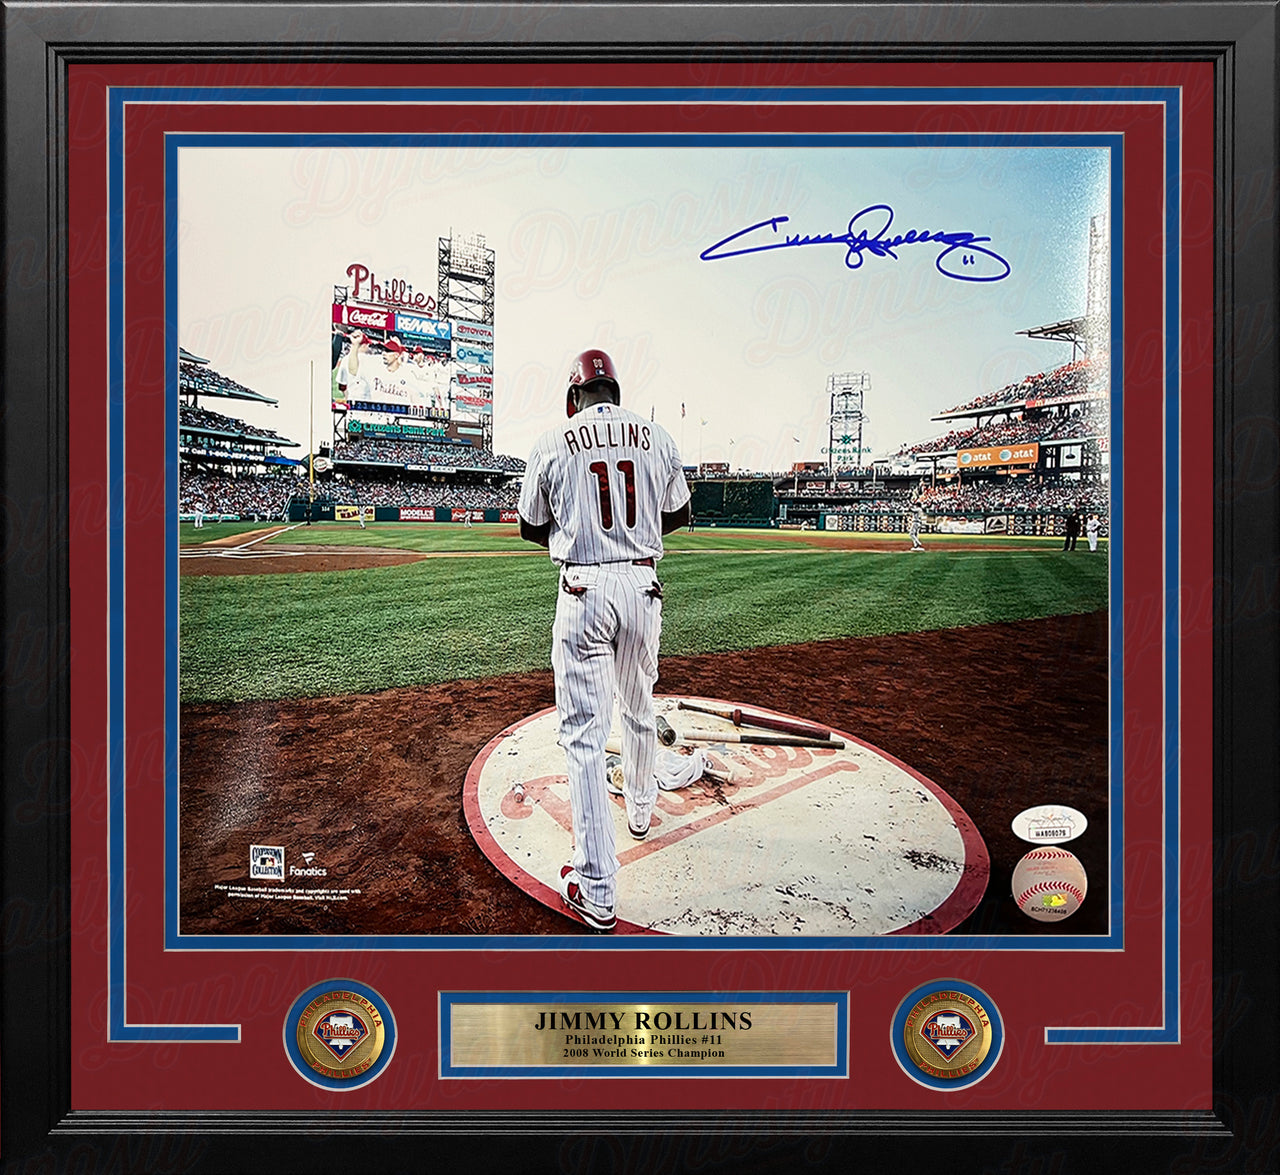 Jimmy Rollins Waits On Deck Autographed Philadelphia Phillies 11x14 Framed Baseball Photo - Dynasty Sports & Framing 